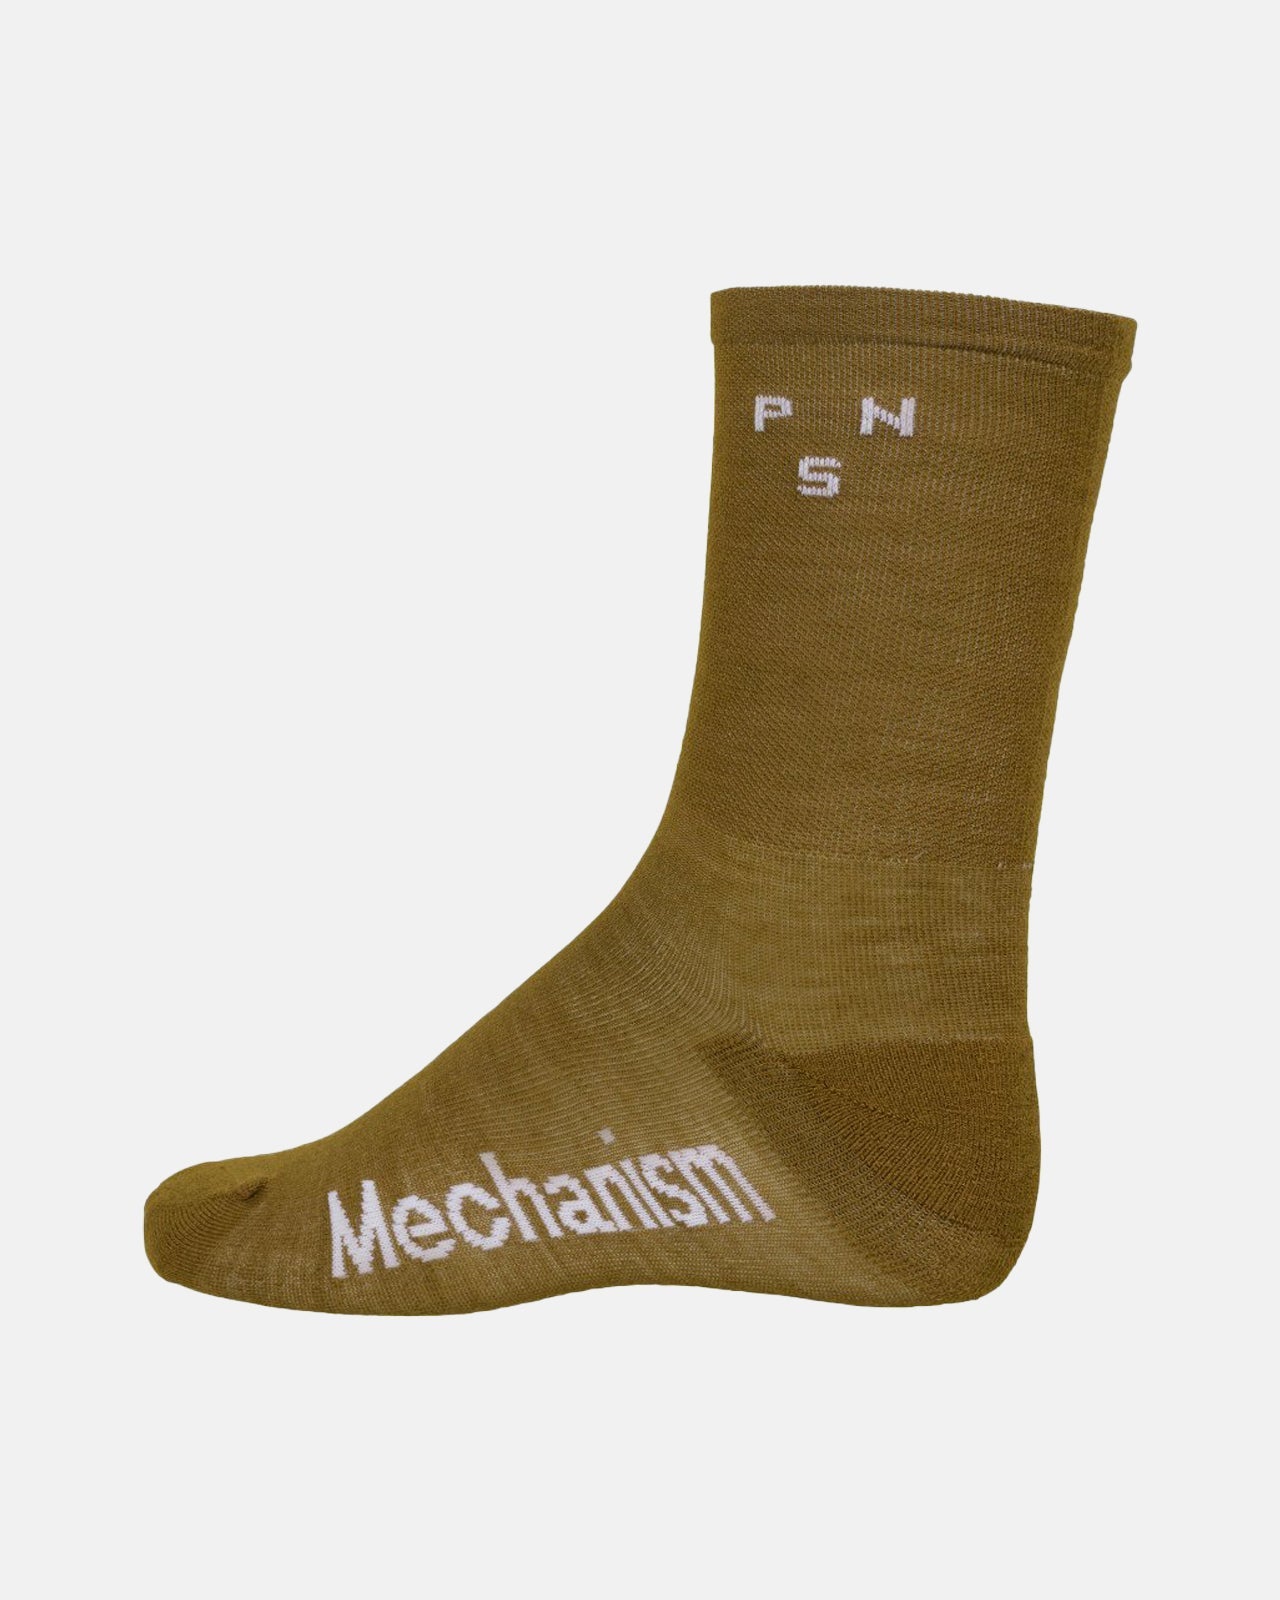 Mechanism Thermal Socks - Terrain